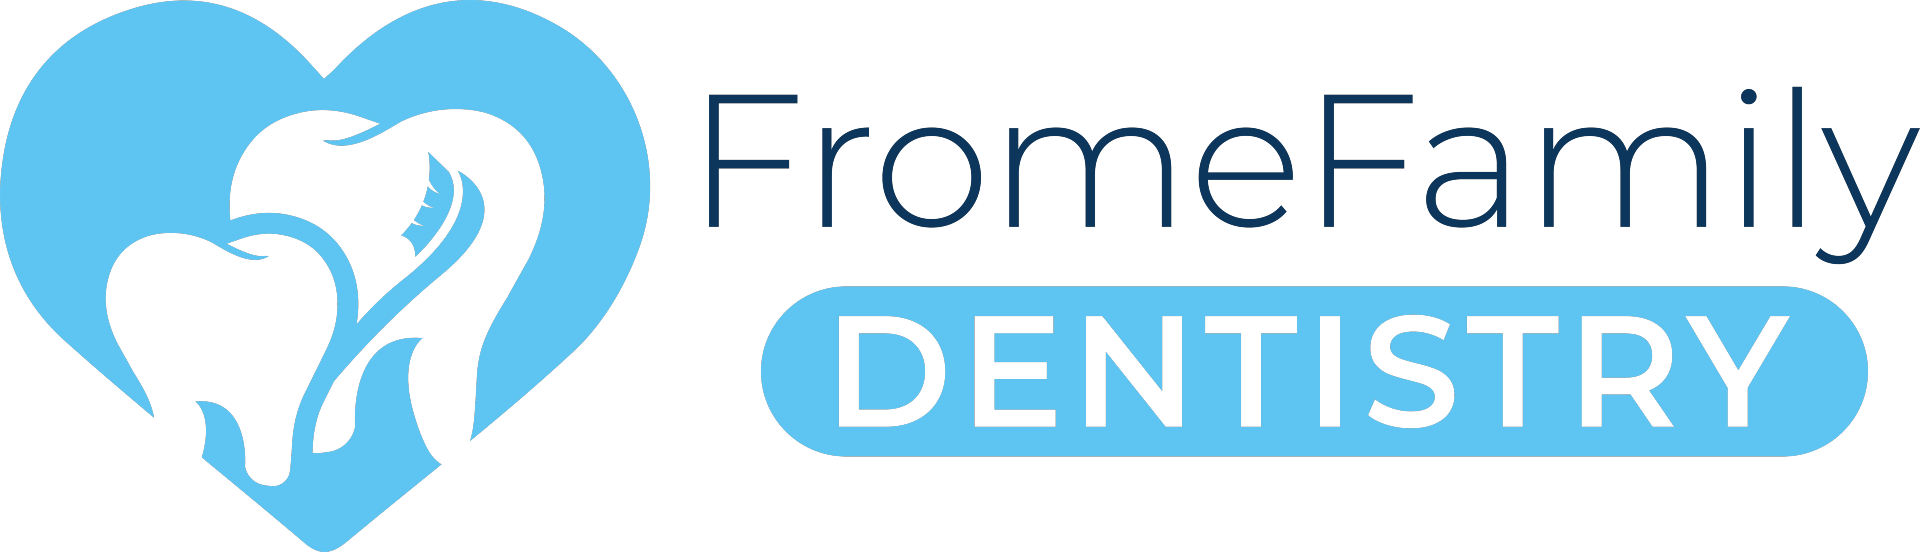 Frome Family Dentistry logo